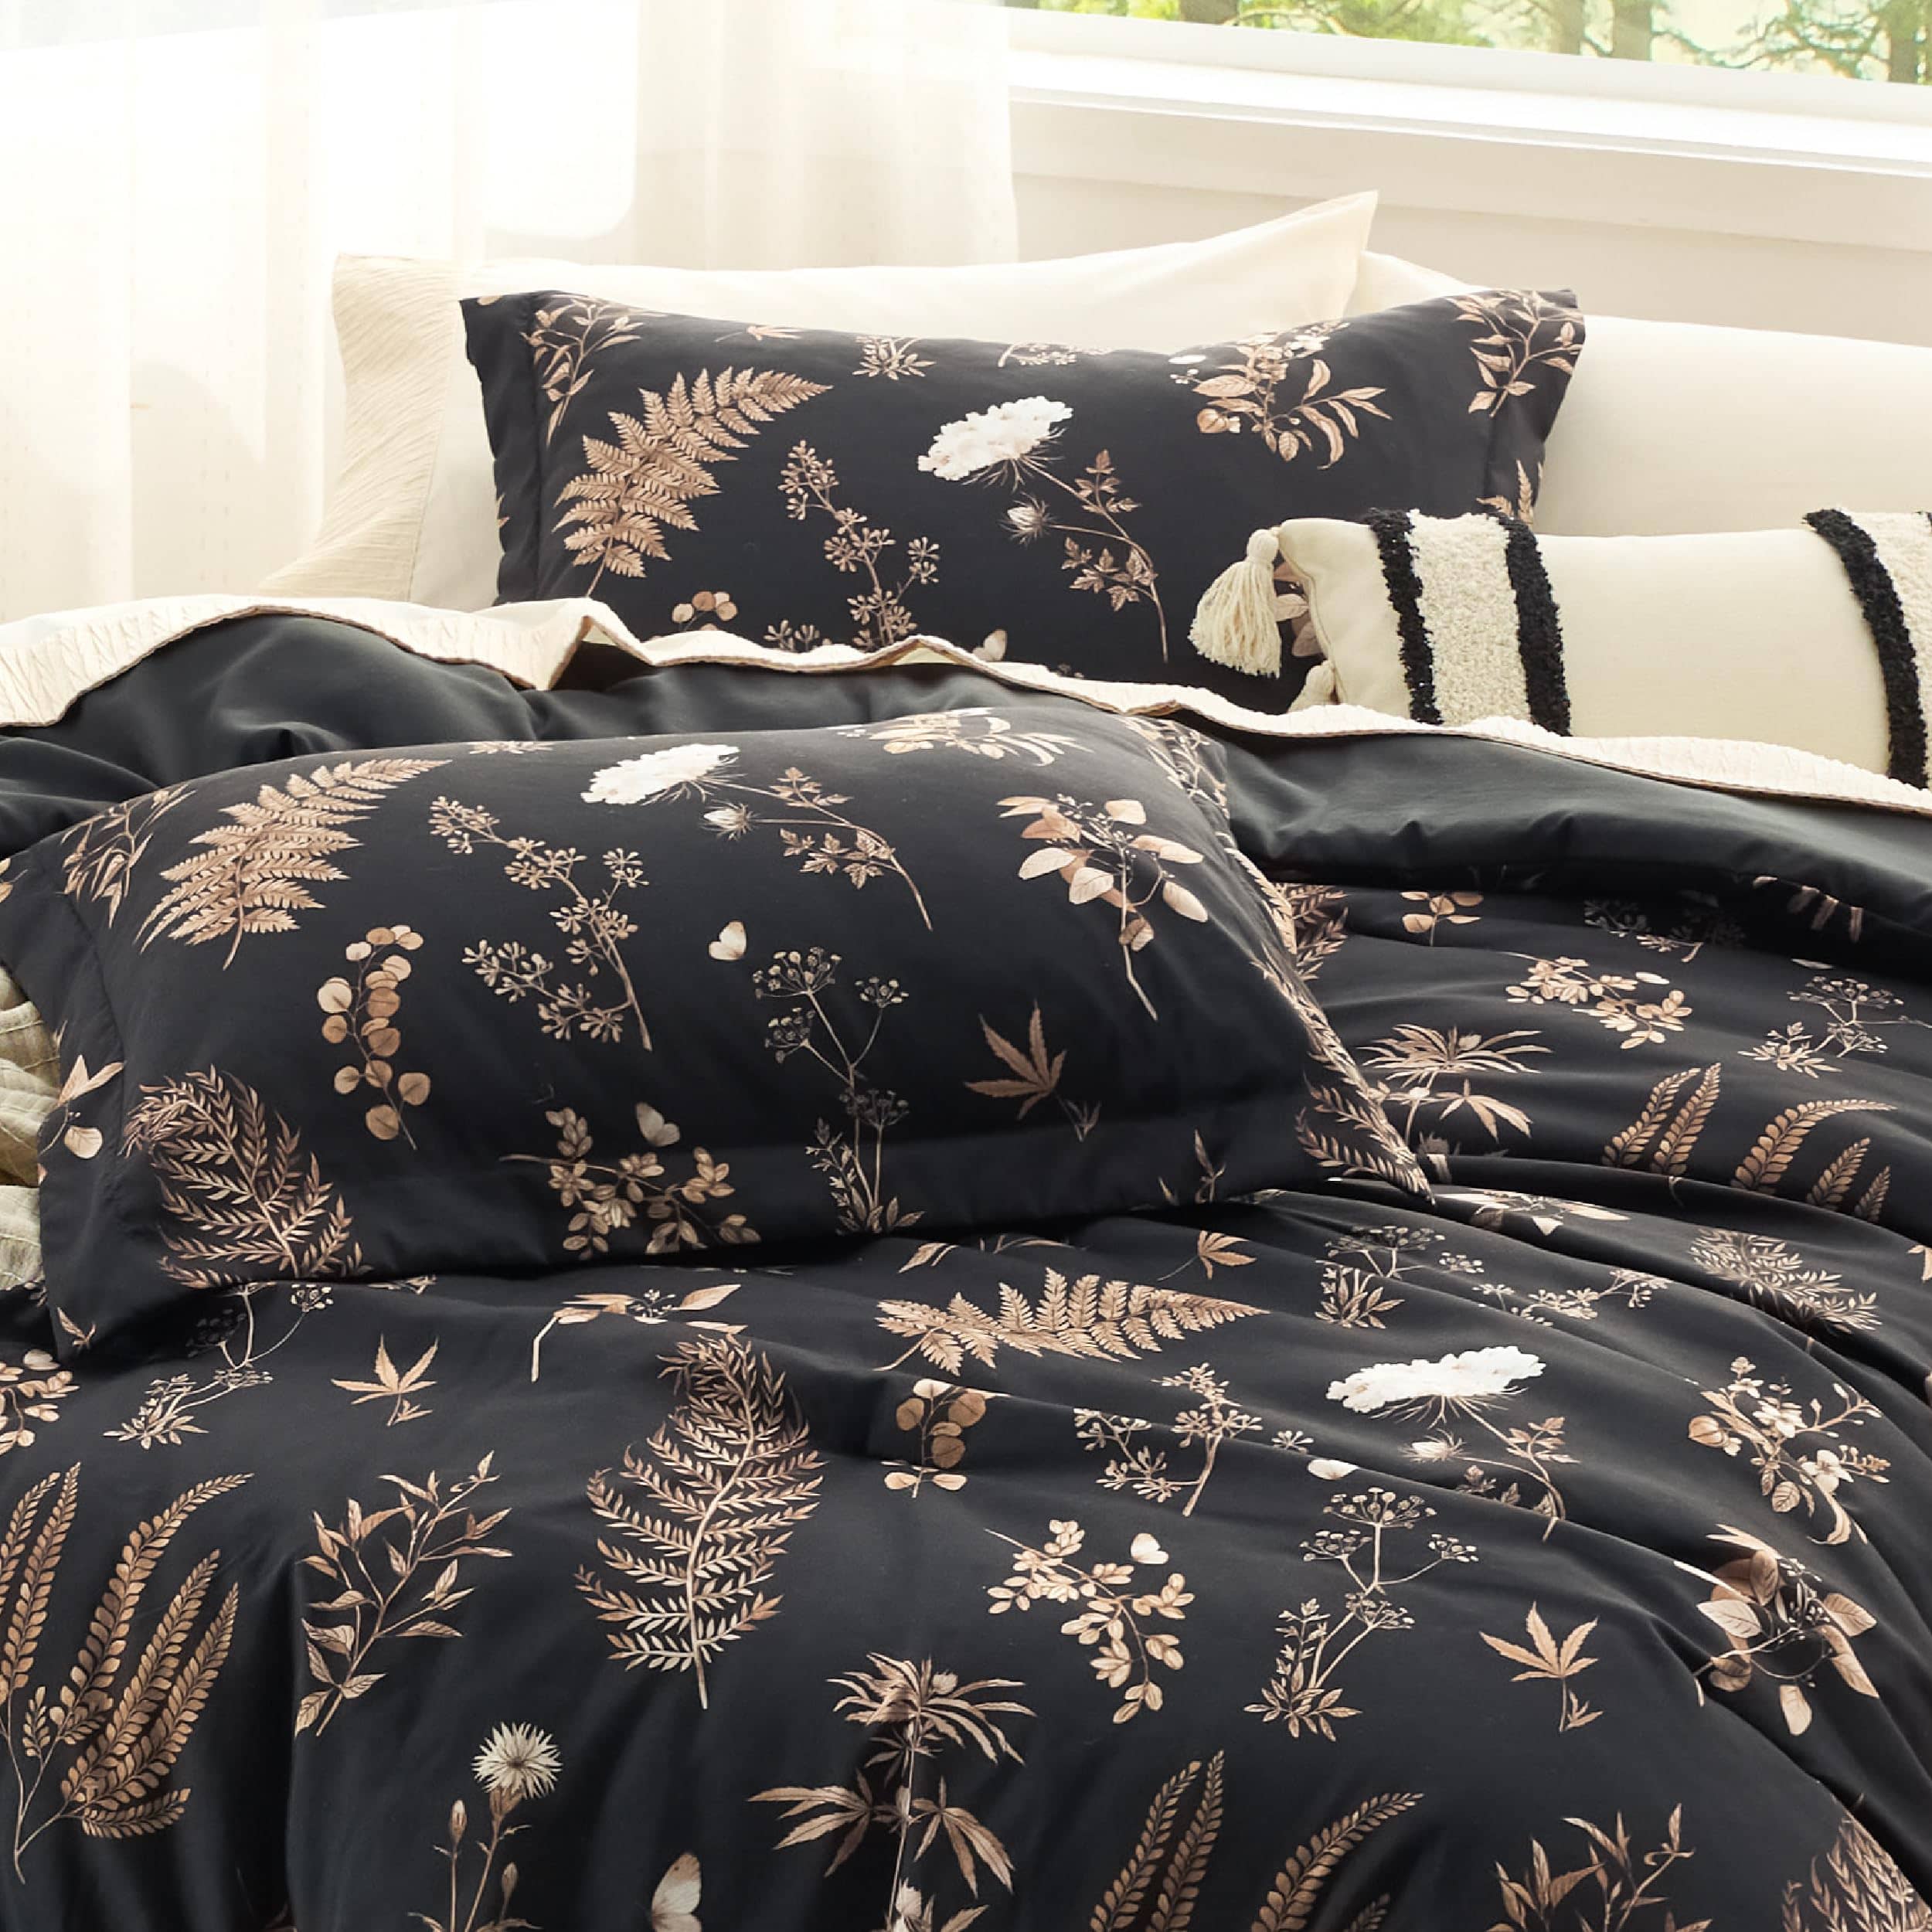 Retro Botanical Comforter Set